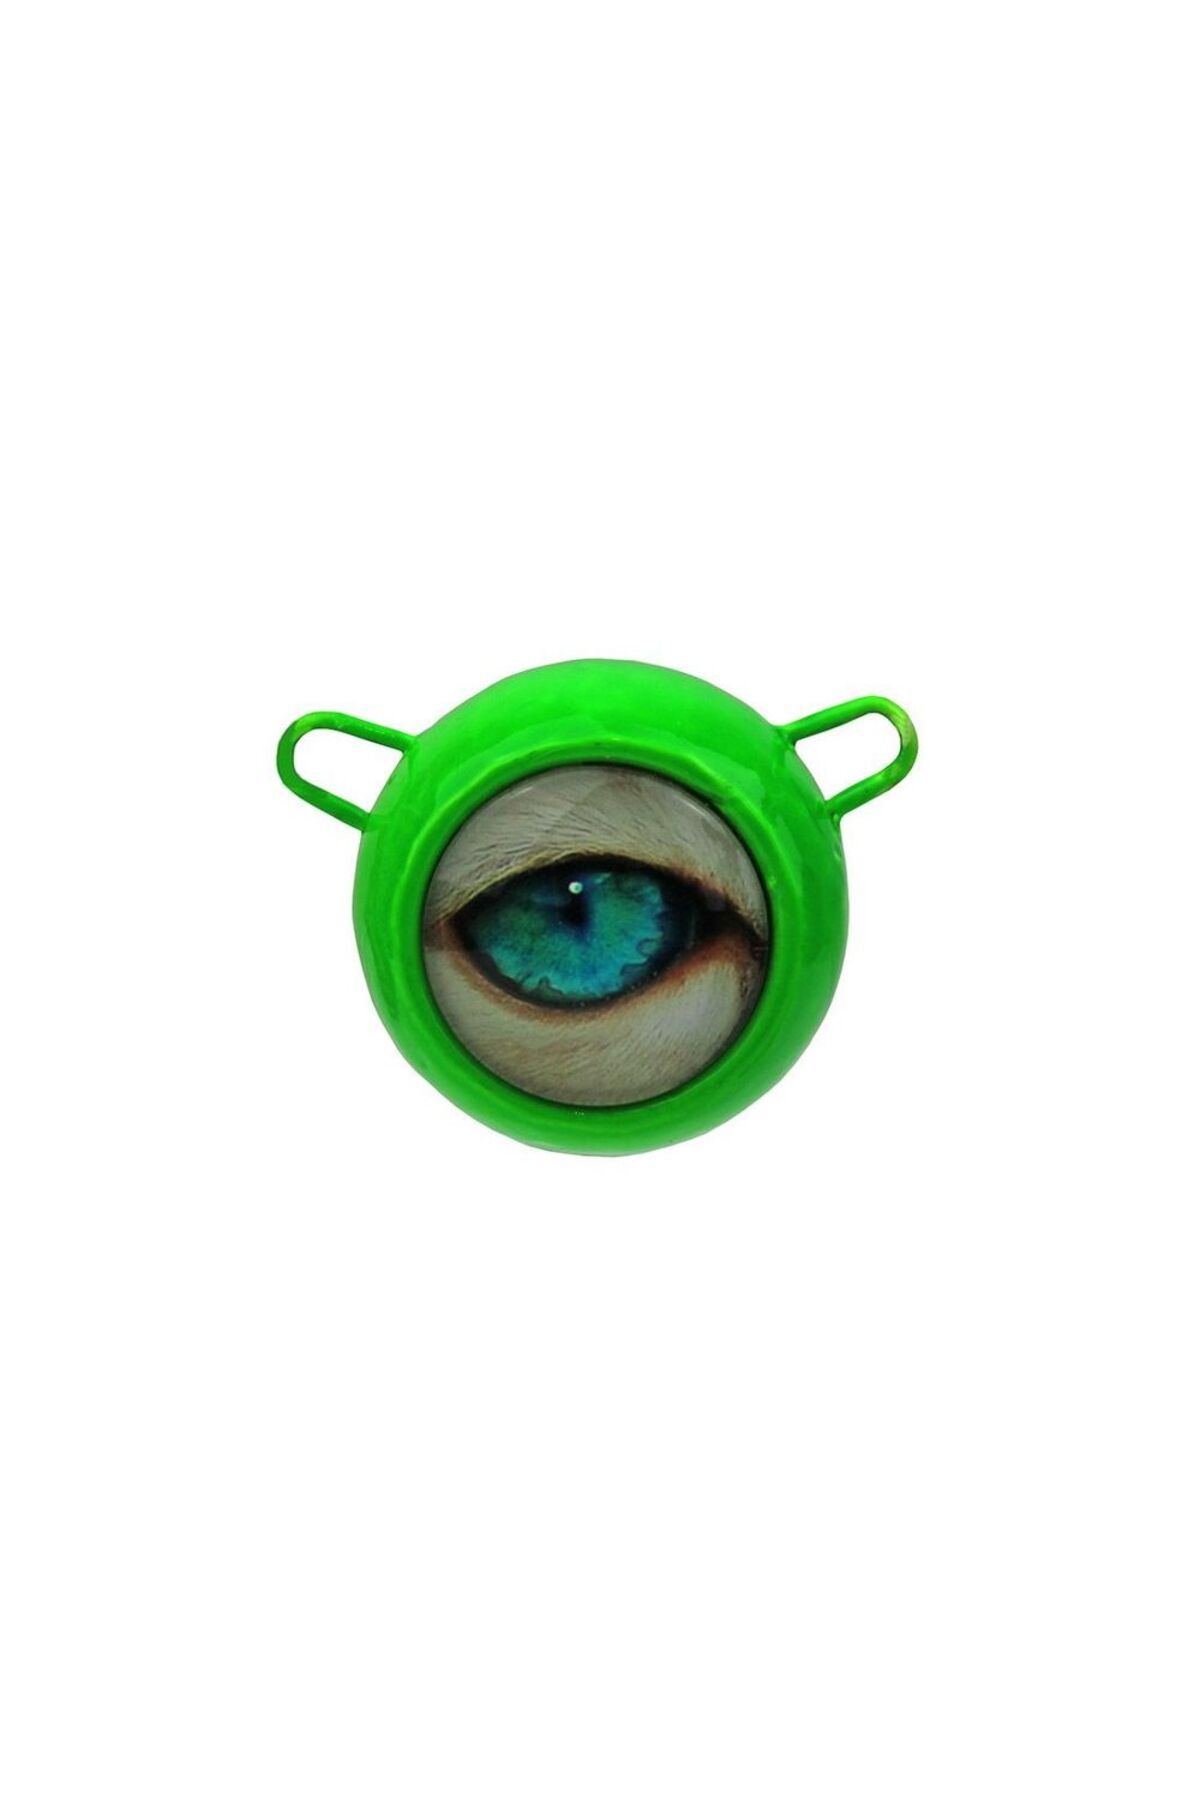 Anchor Melek Göz Yeşil 250 gr